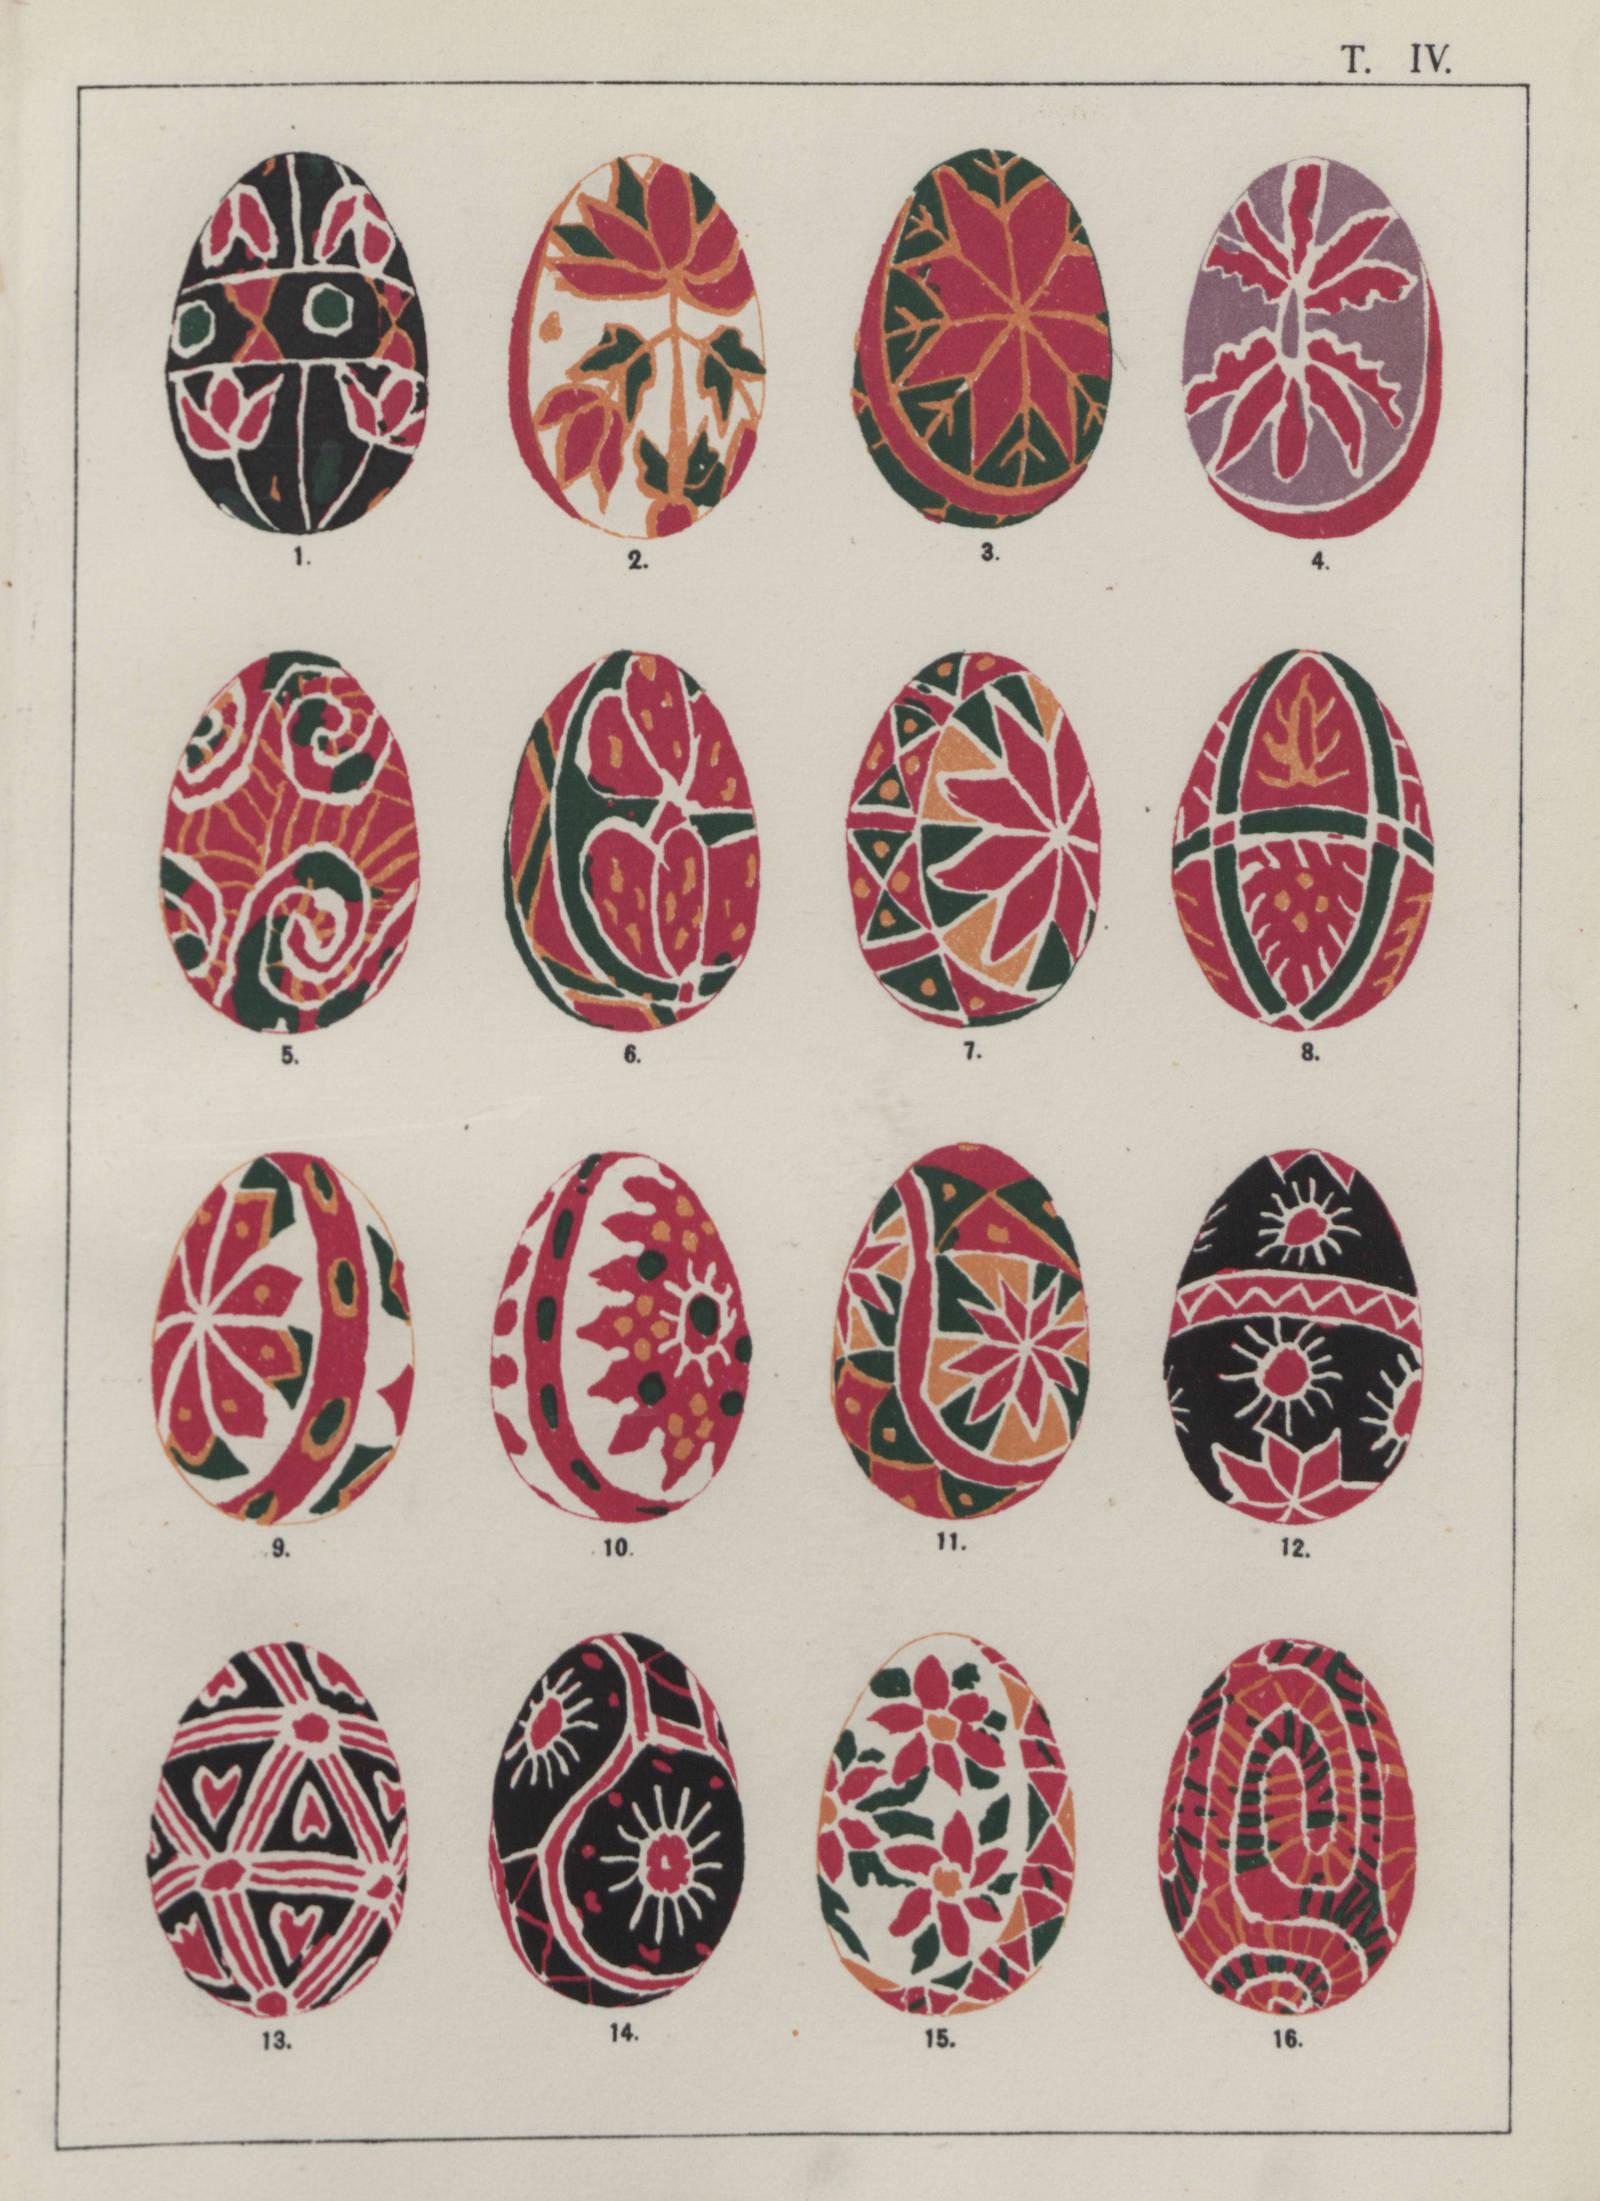 Primarily red and white pysanky designs. plate 4 of Opisanīe kollektsii narodnykh pisanok, 1899